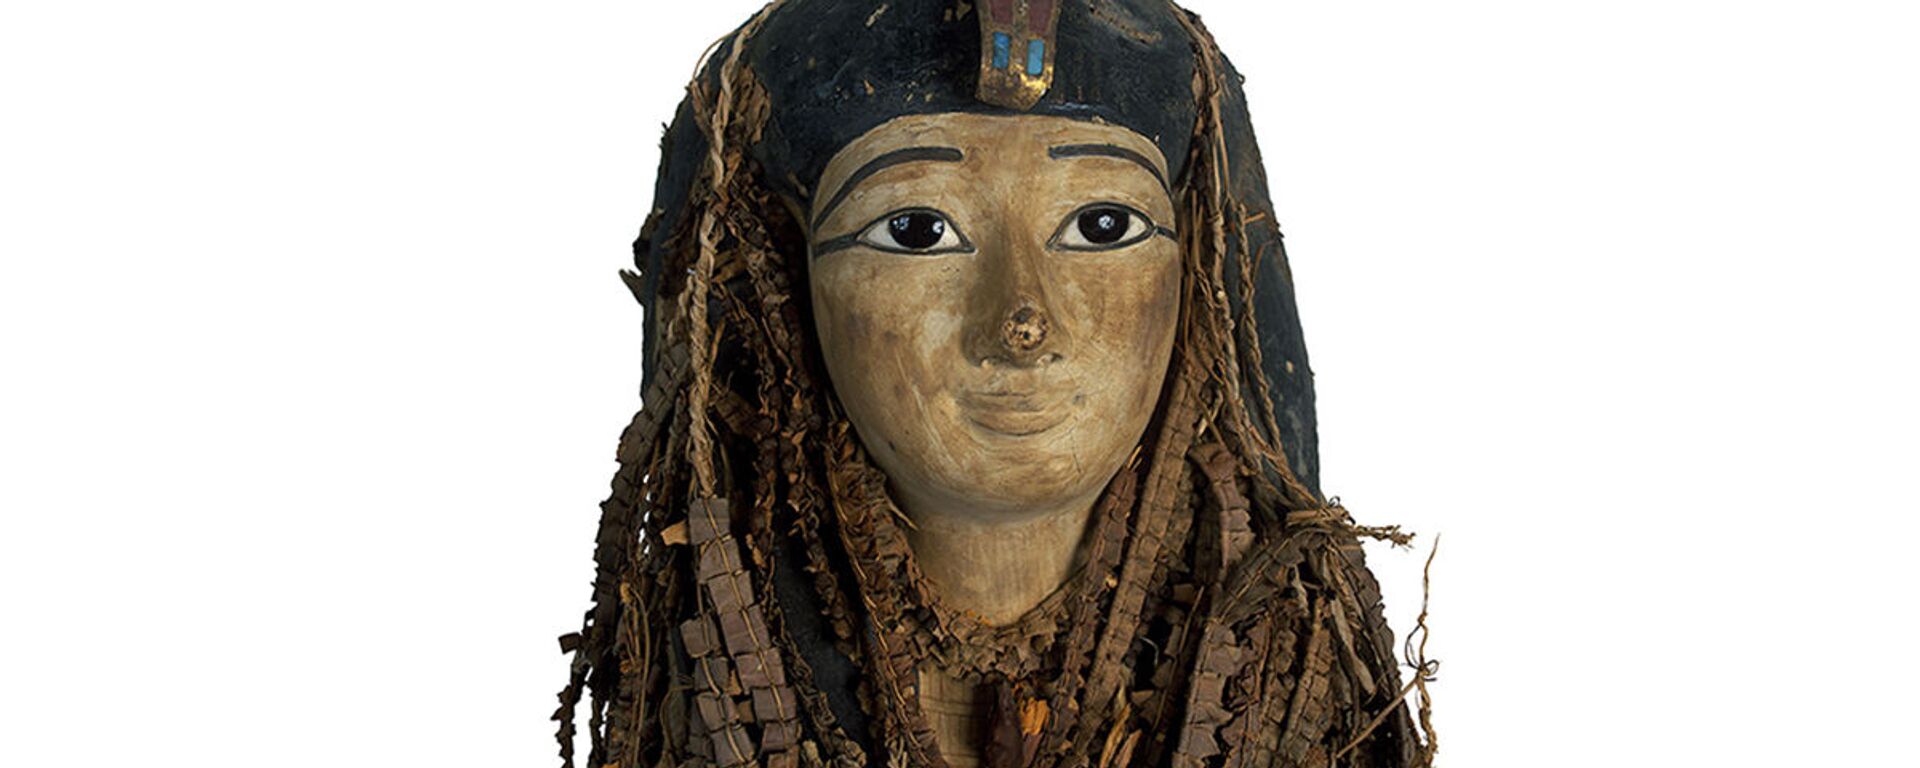 Máscara facial na múmia do faraó egípcio Amenhotep I - Sputnik Brasil, 1920, 28.12.2021